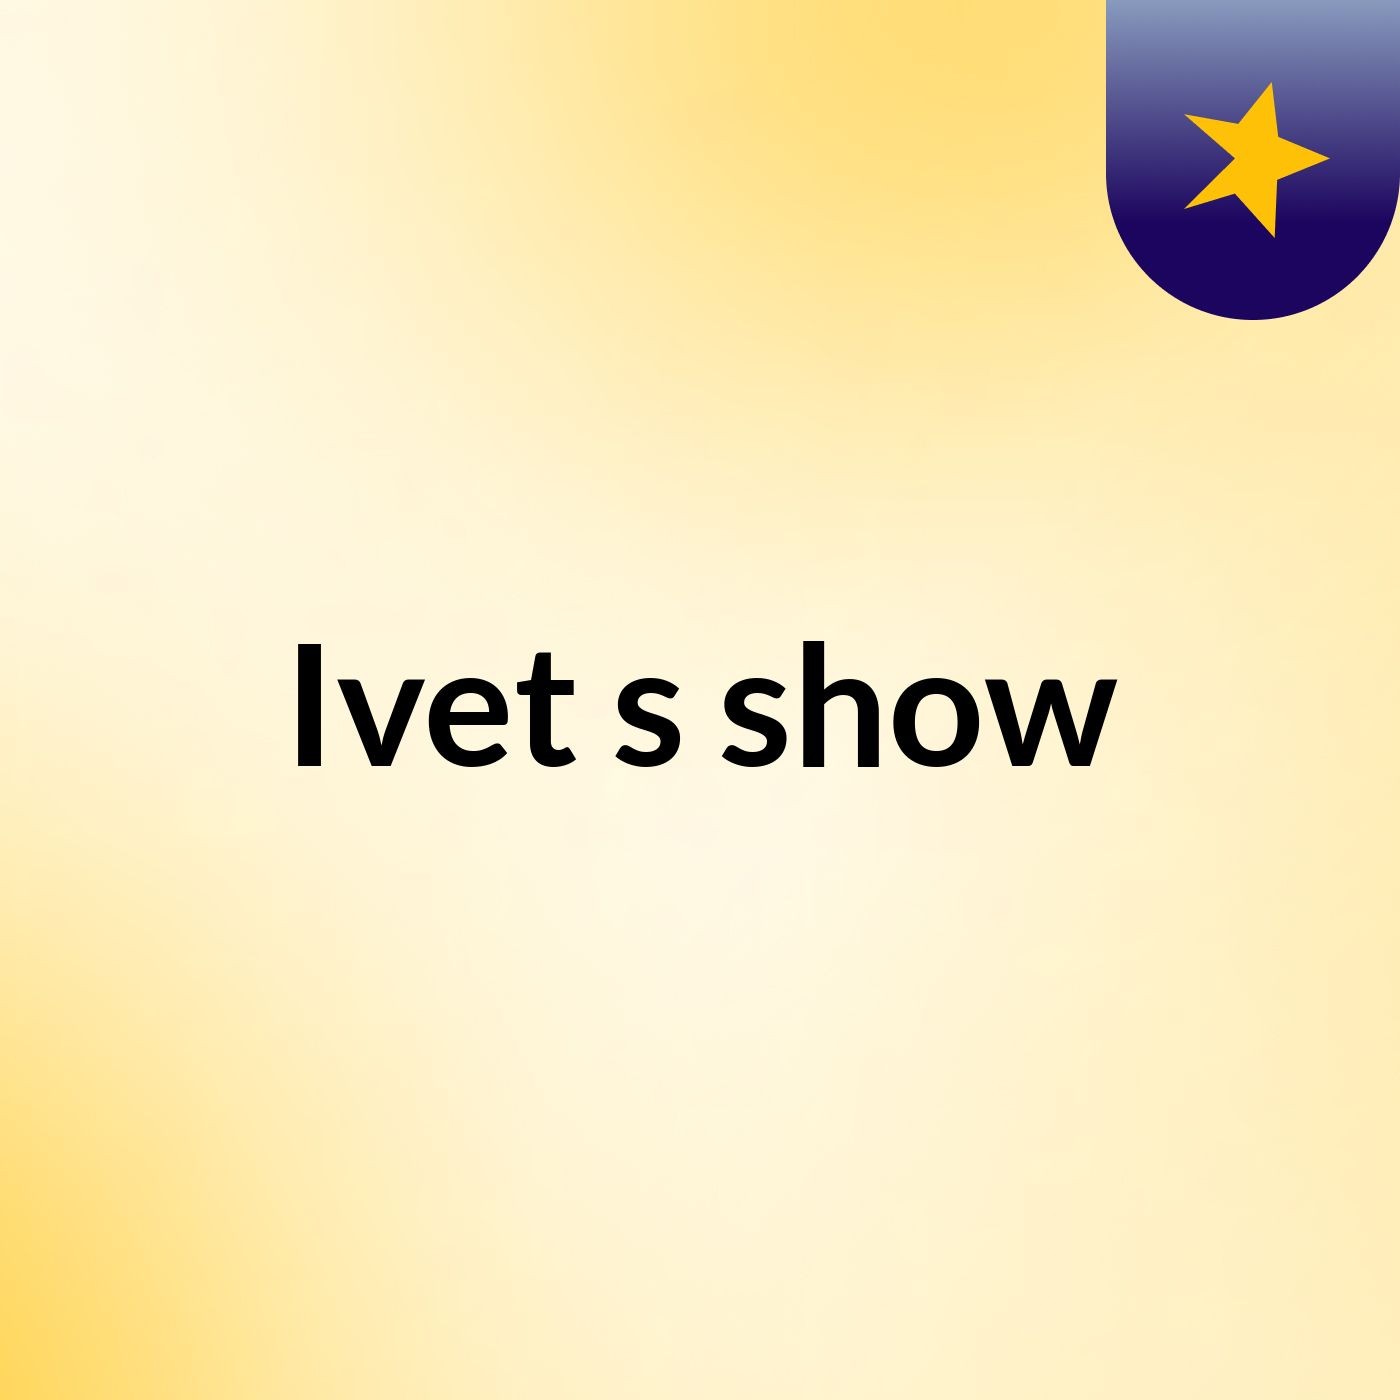 Ivet's show